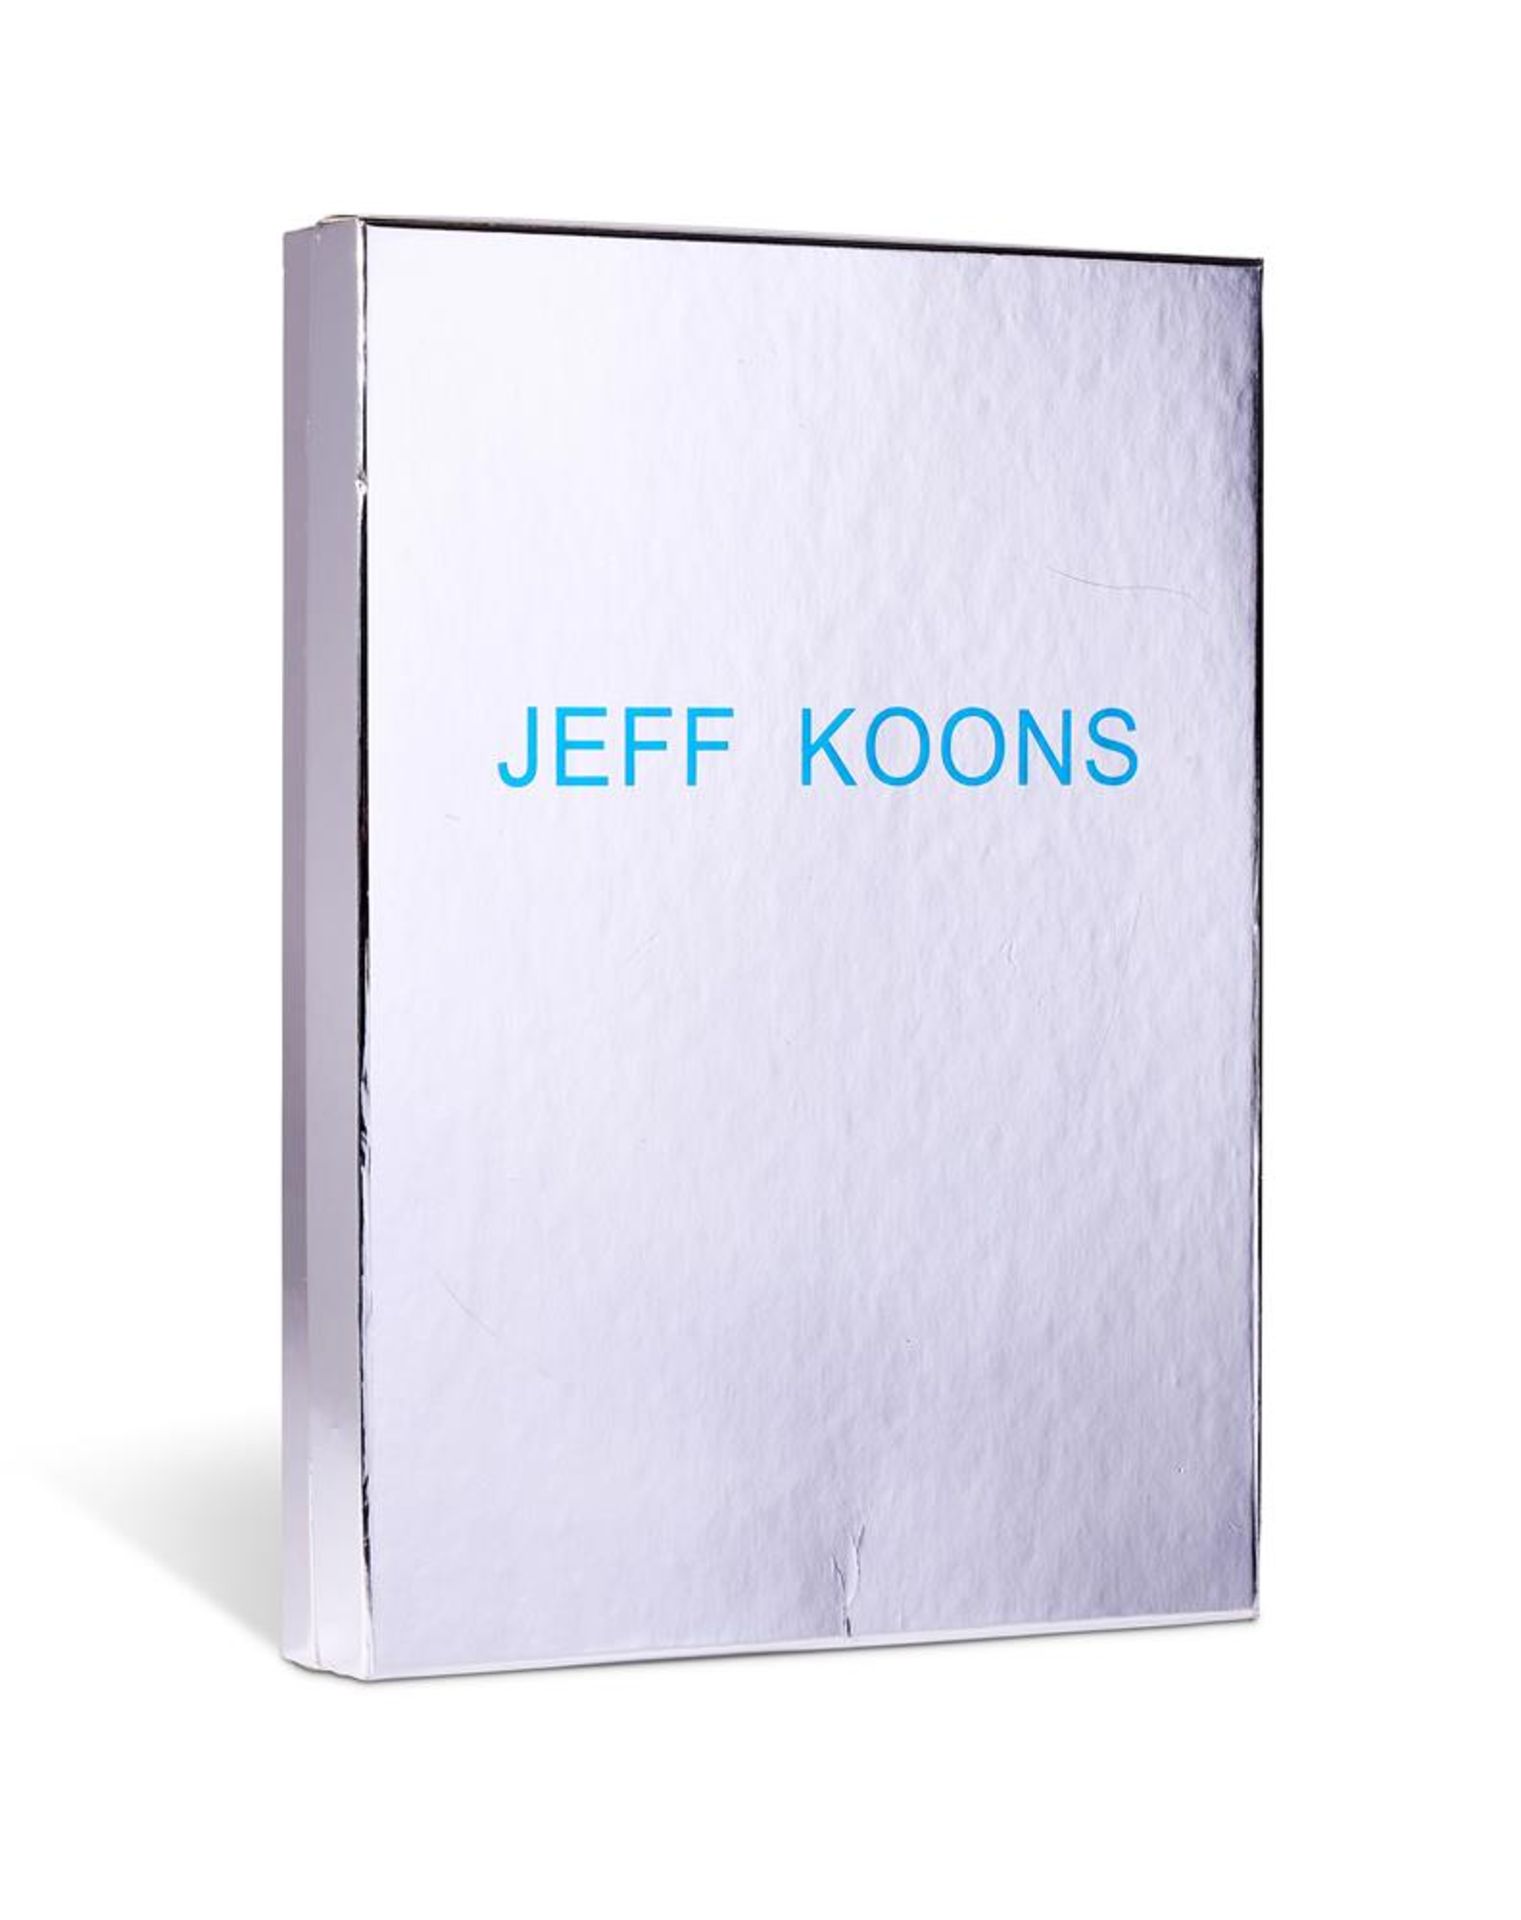 JEFF KOONS (AMERICAN B. 1955), KANGAROO MIRROR BOX (BLUE) - Image 4 of 5